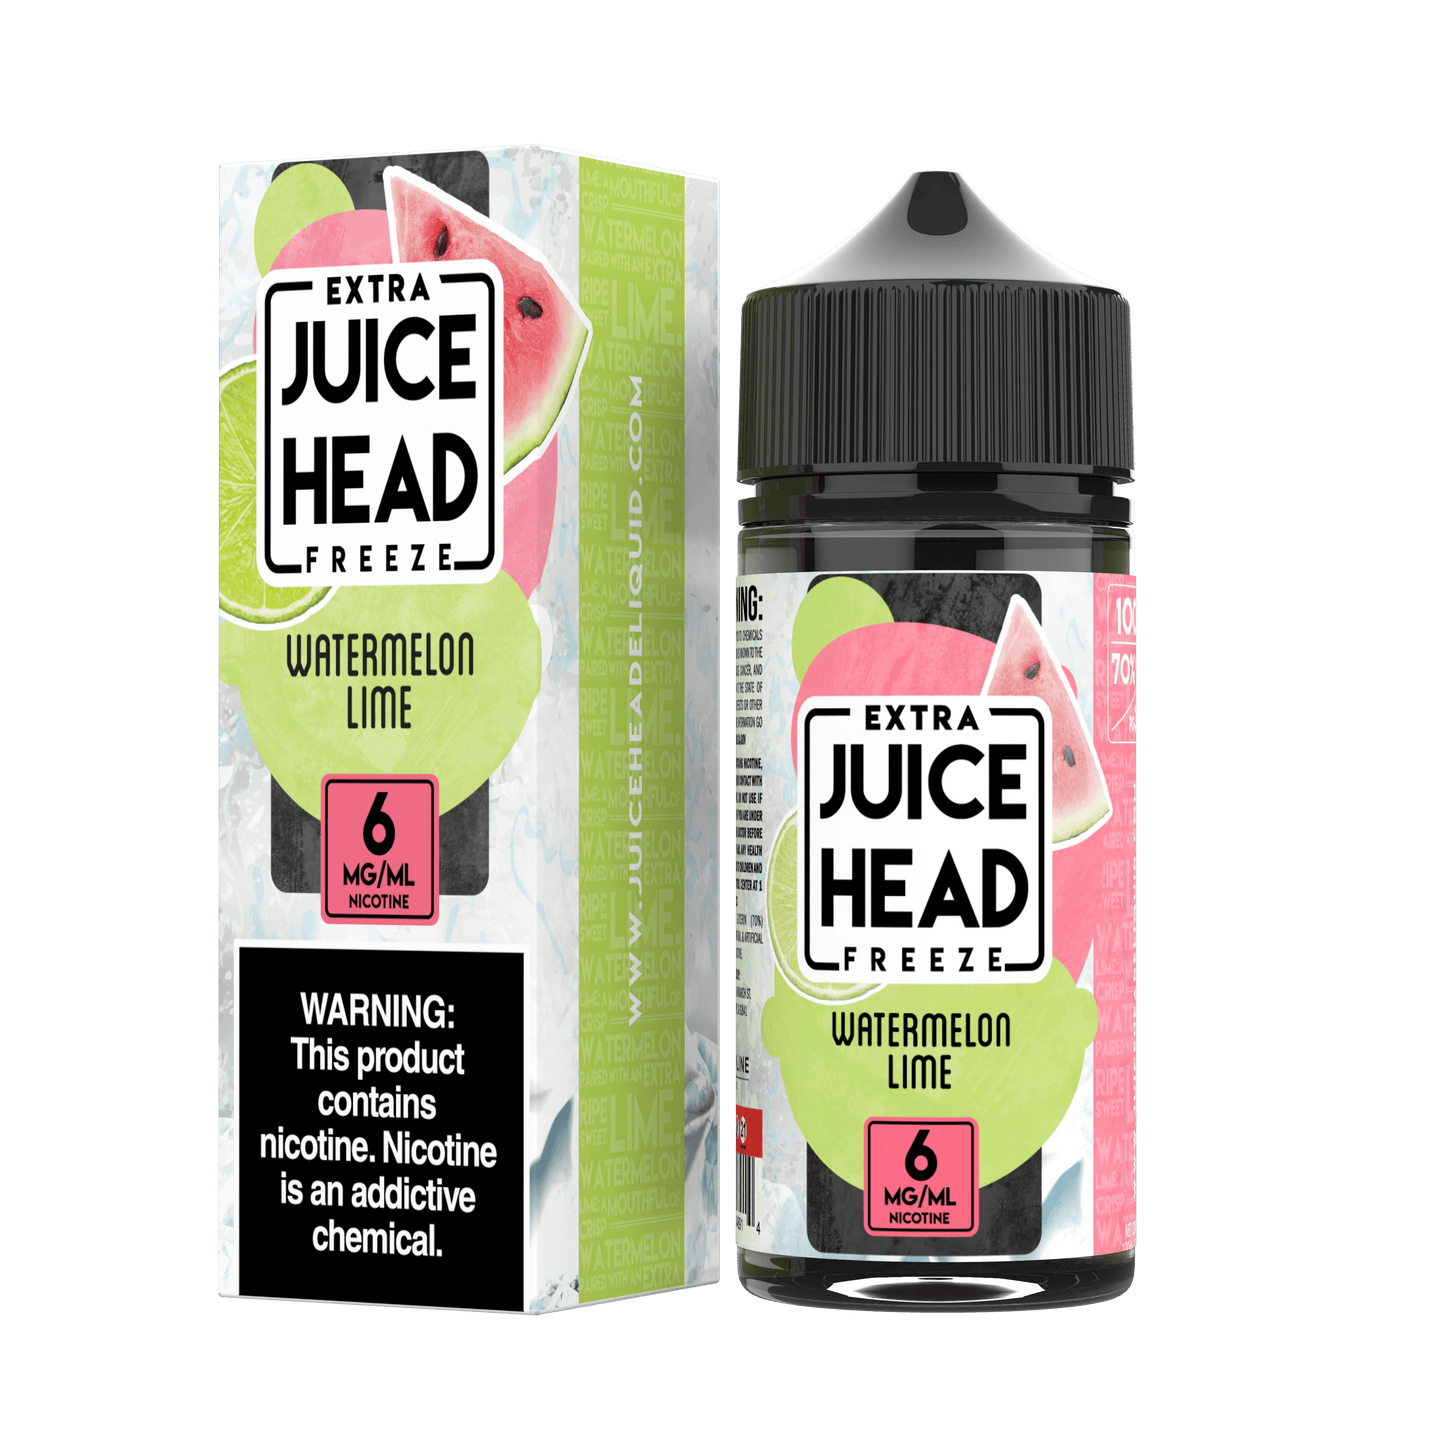 Freeze Watermelon Lime - Juice Head - 100ML